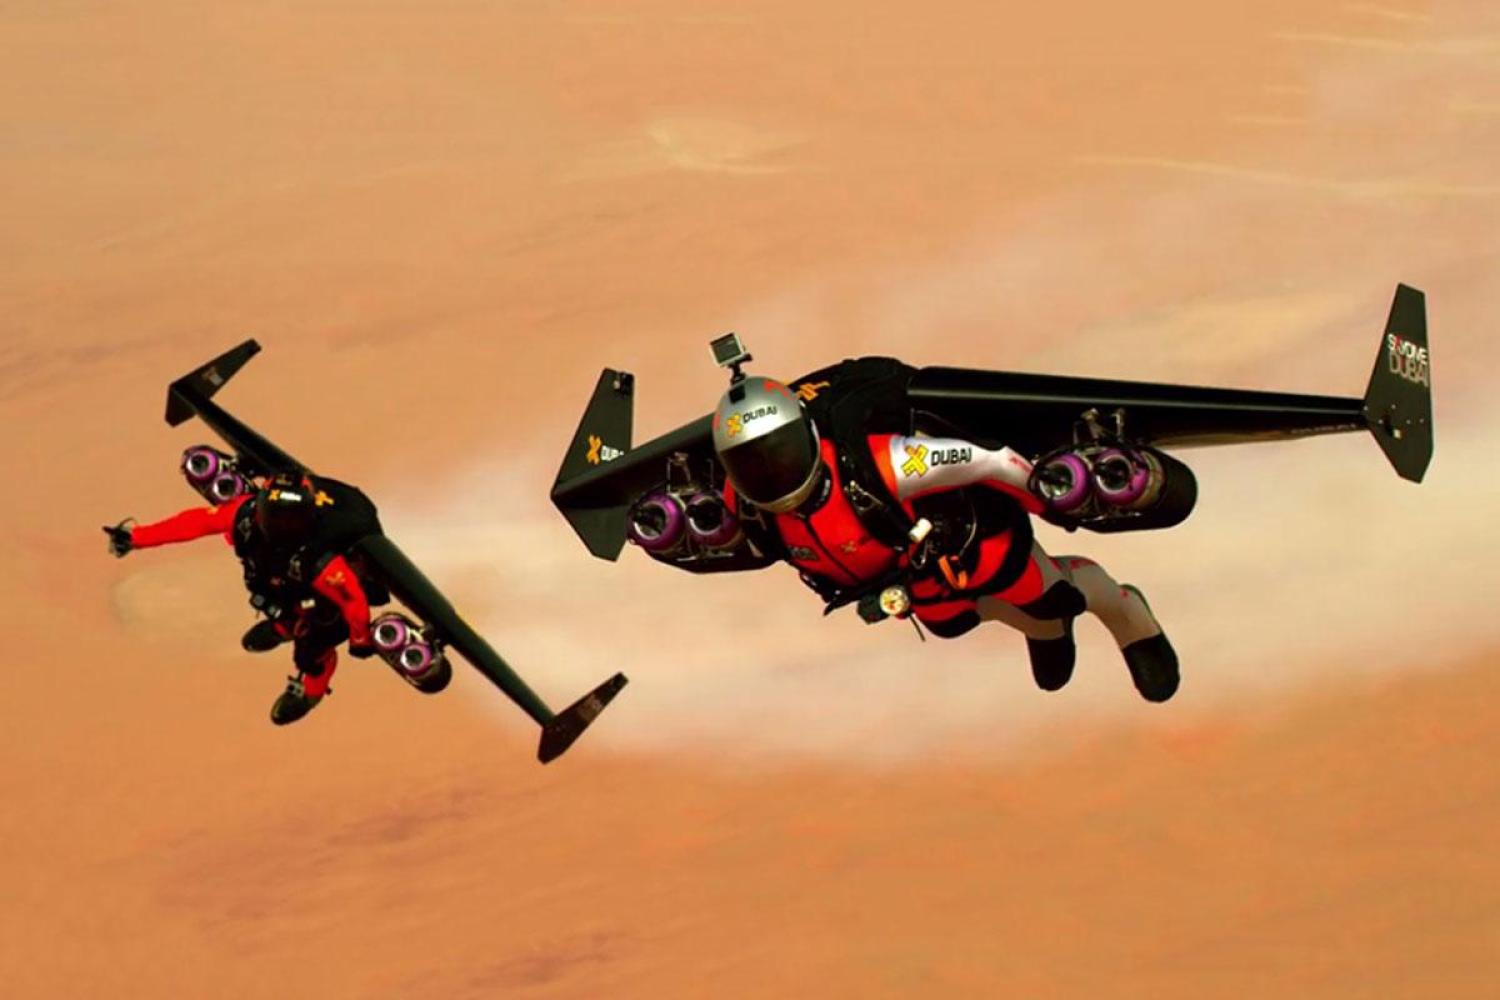 Watch jetpack pilot Vince Reffet set a new altitude record in Dubai